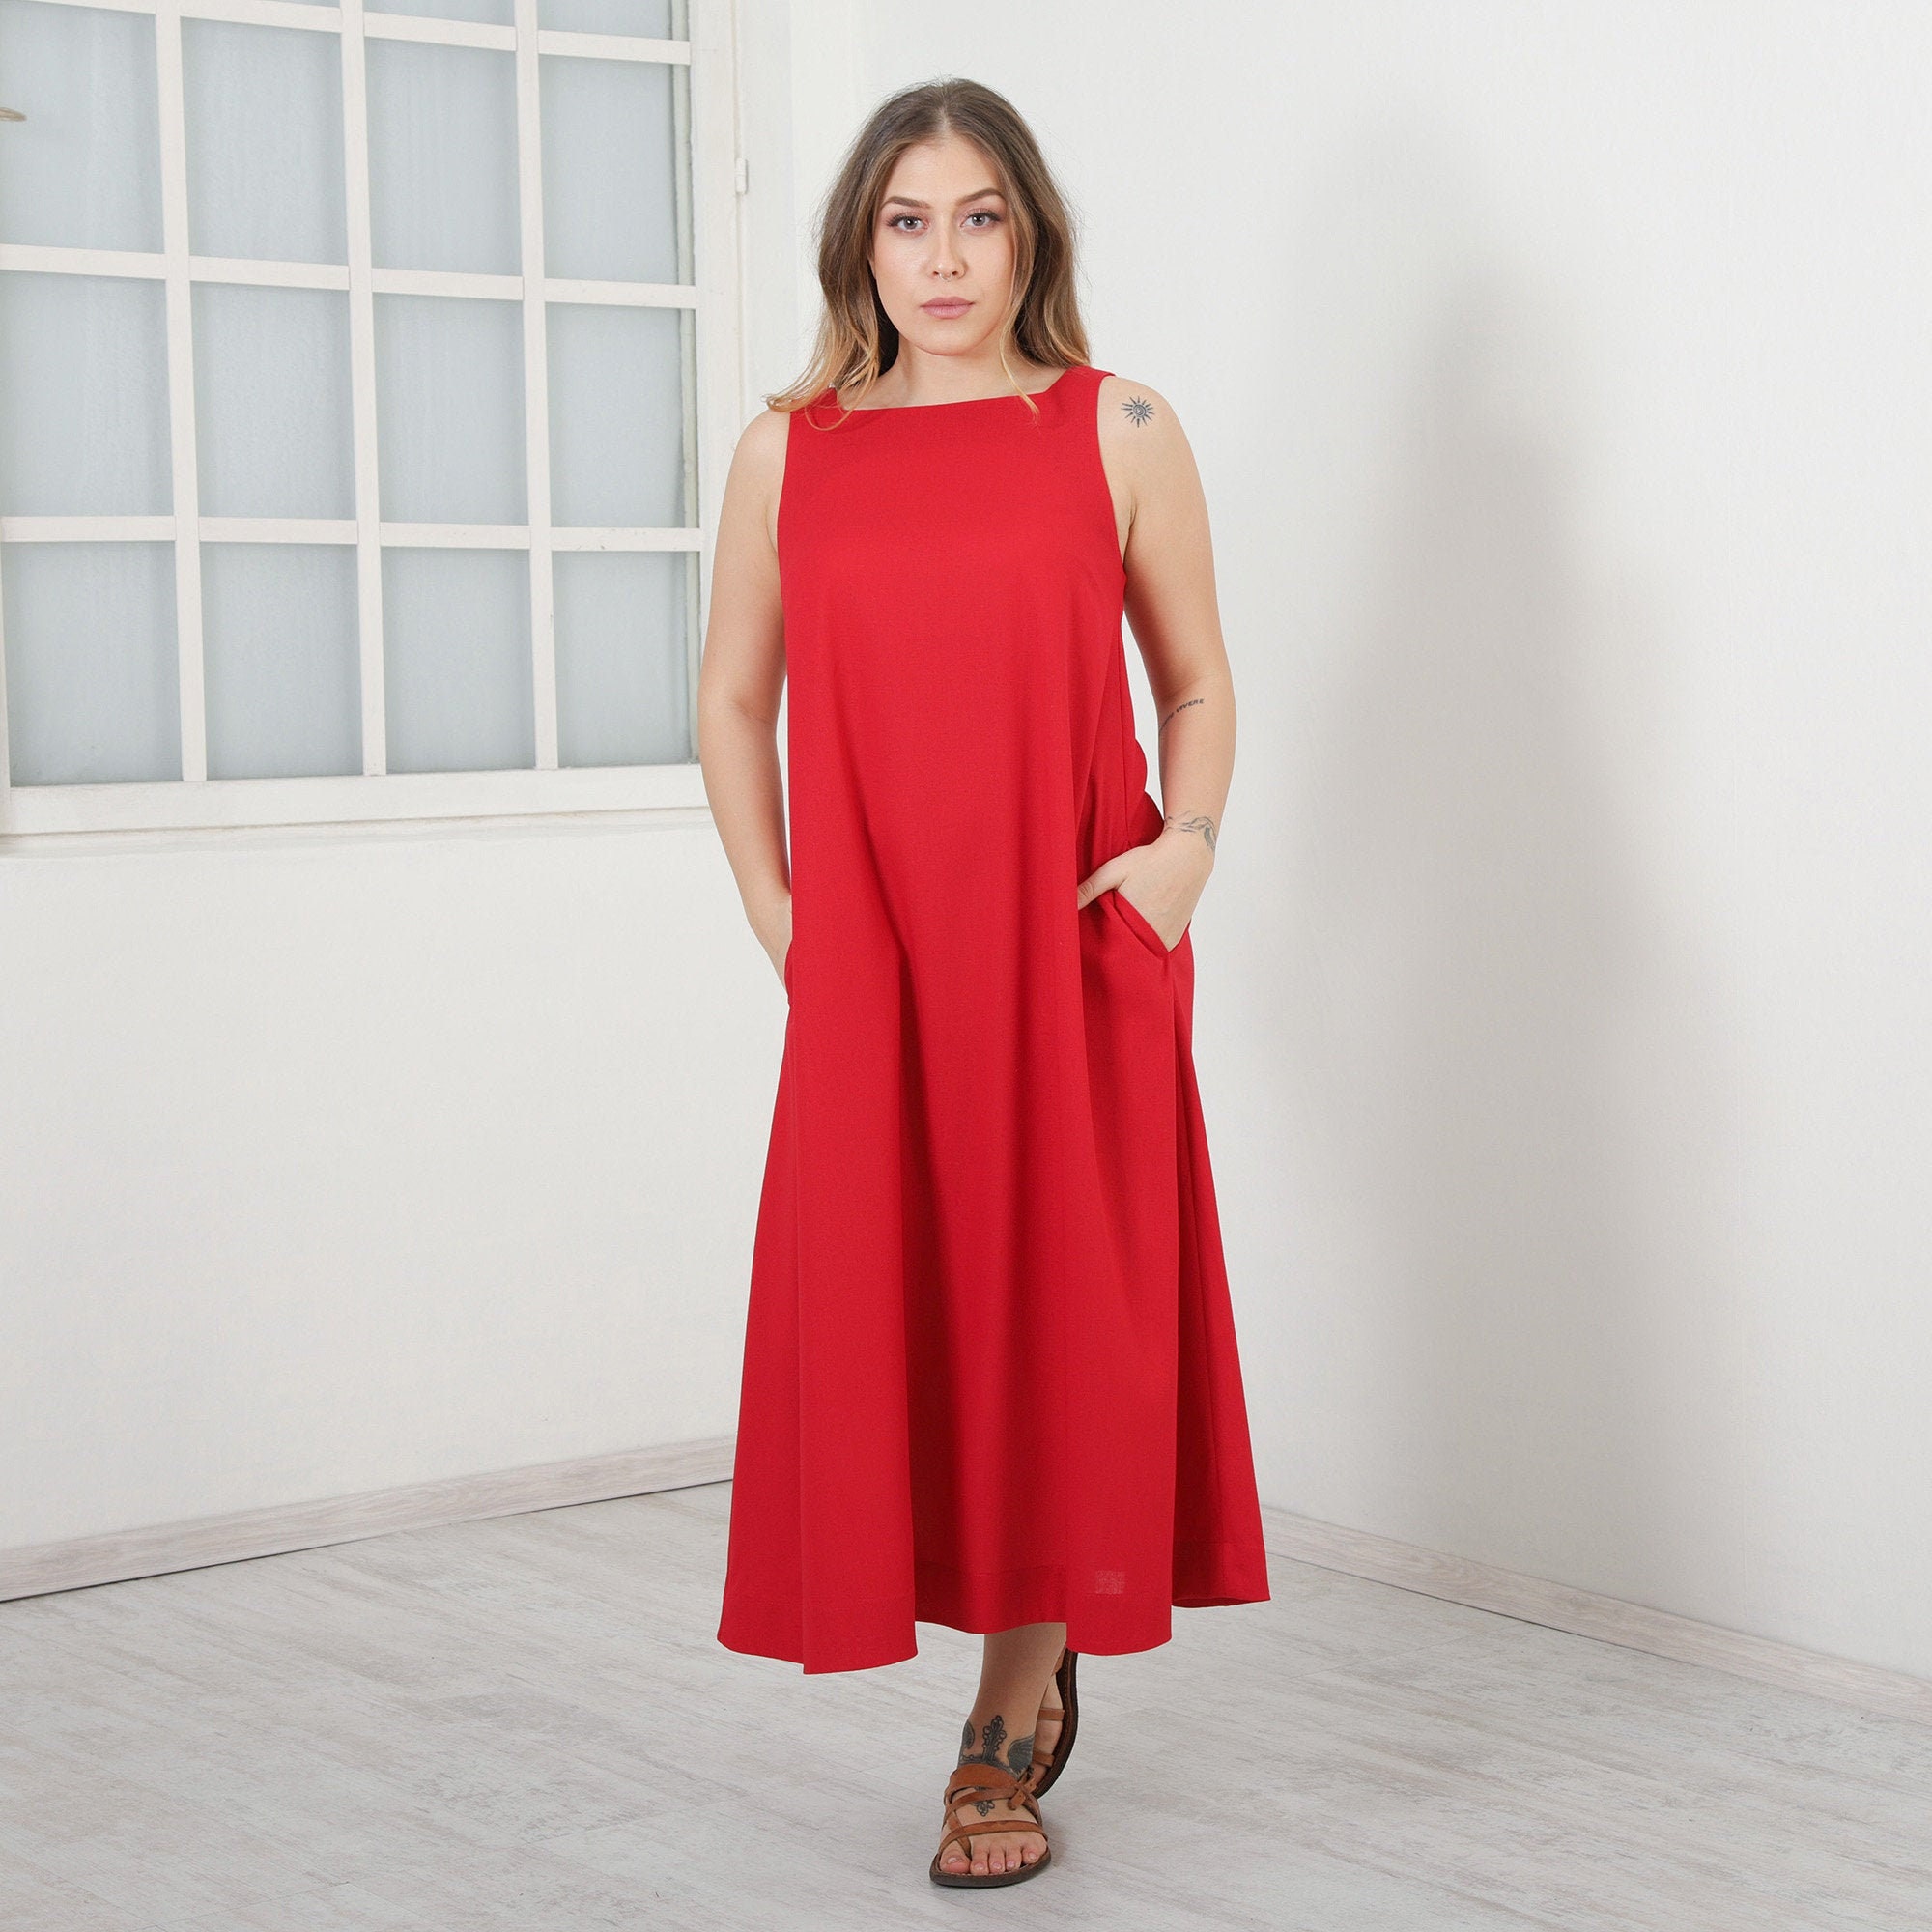 Red Cocktail Dress SAMANTHA Linen Sleeveless Dress Long | Etsy